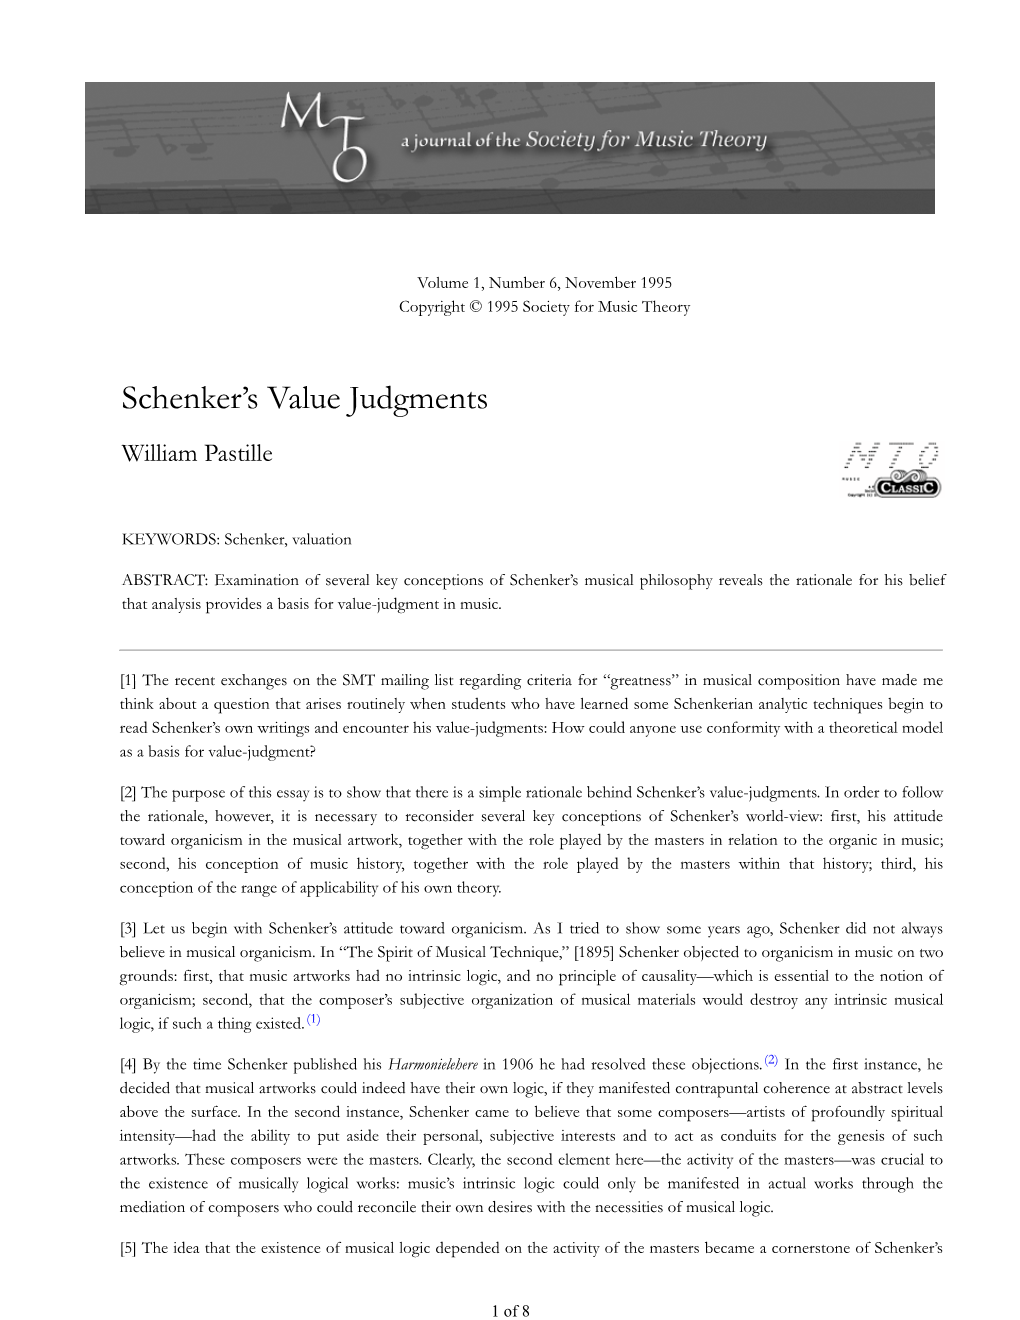 MTO 1.6: Pastille, Schenker's Value Judgments